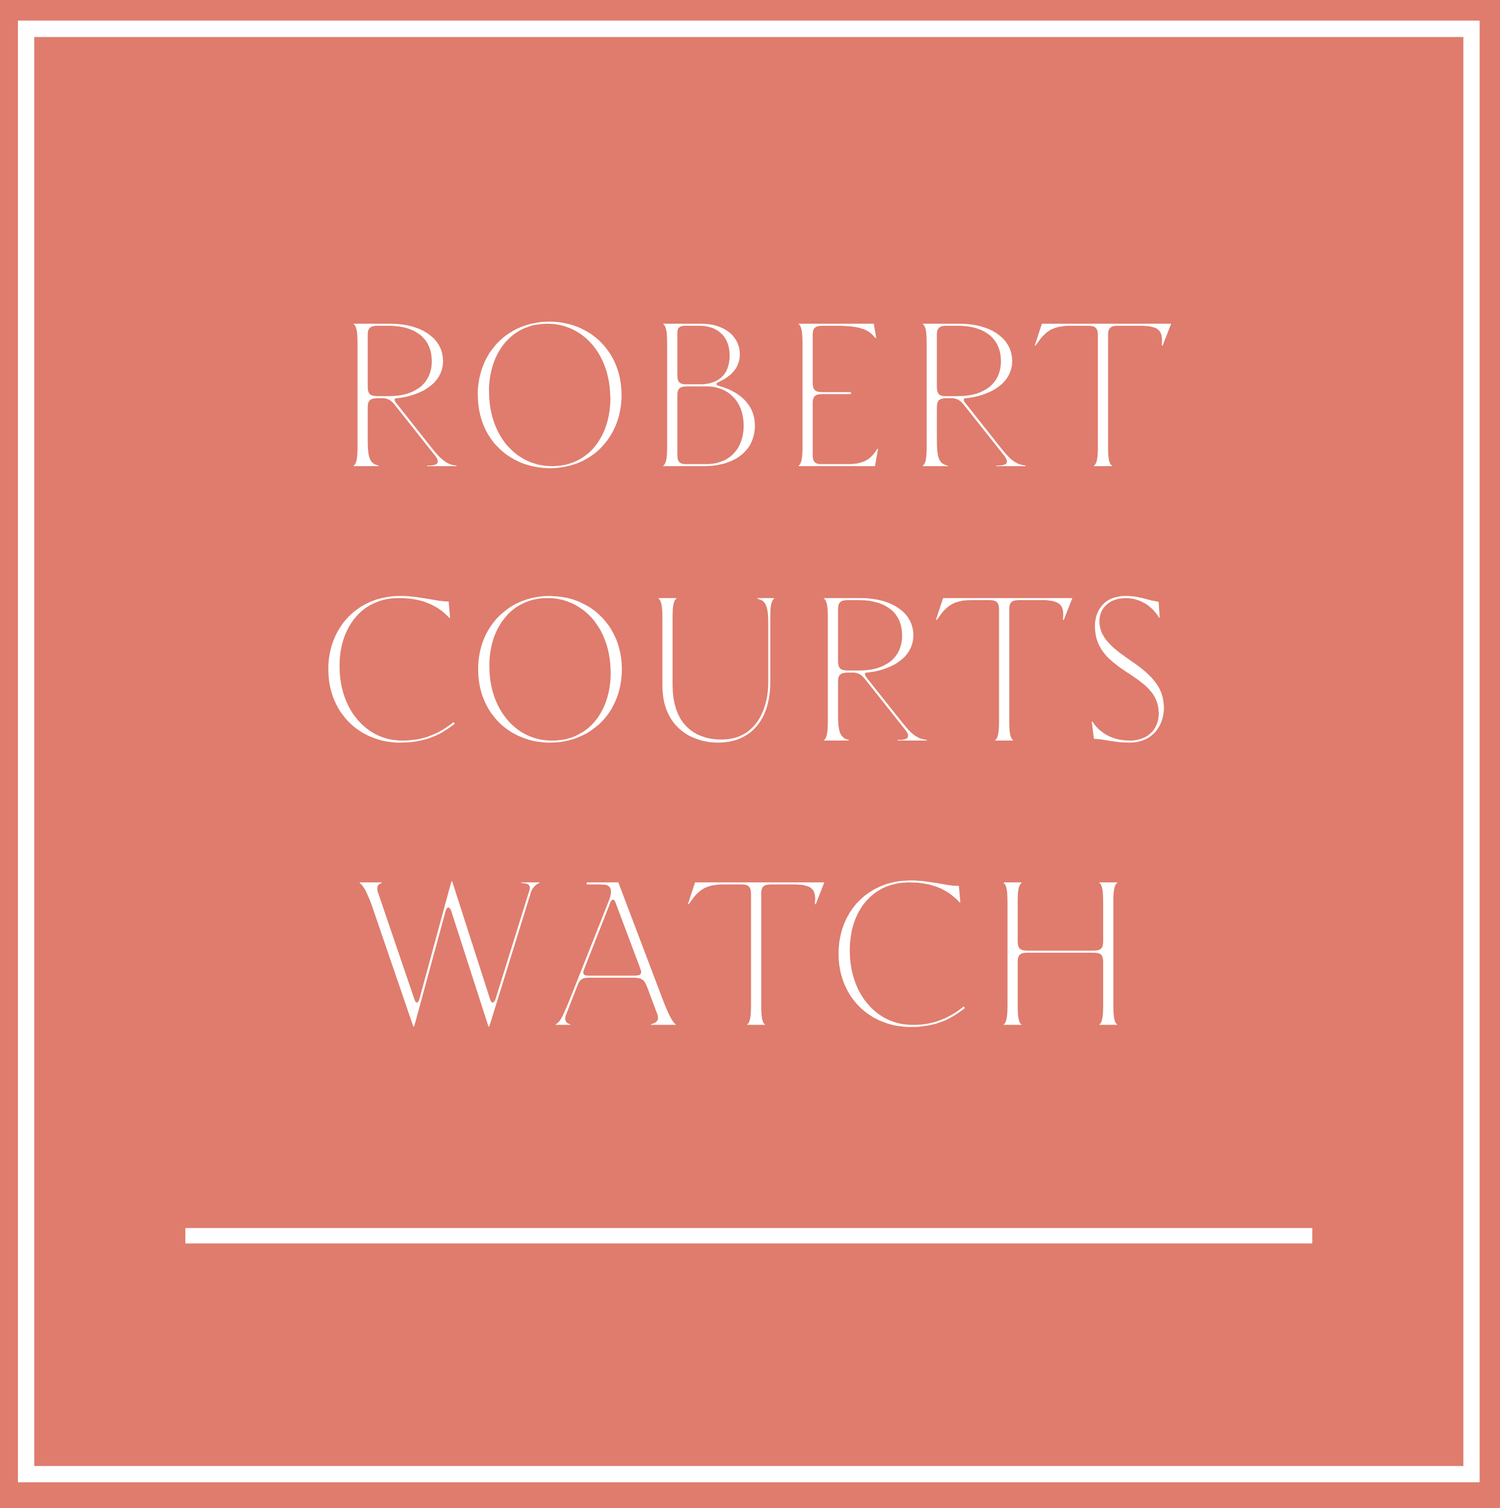 Robert Courts Watch